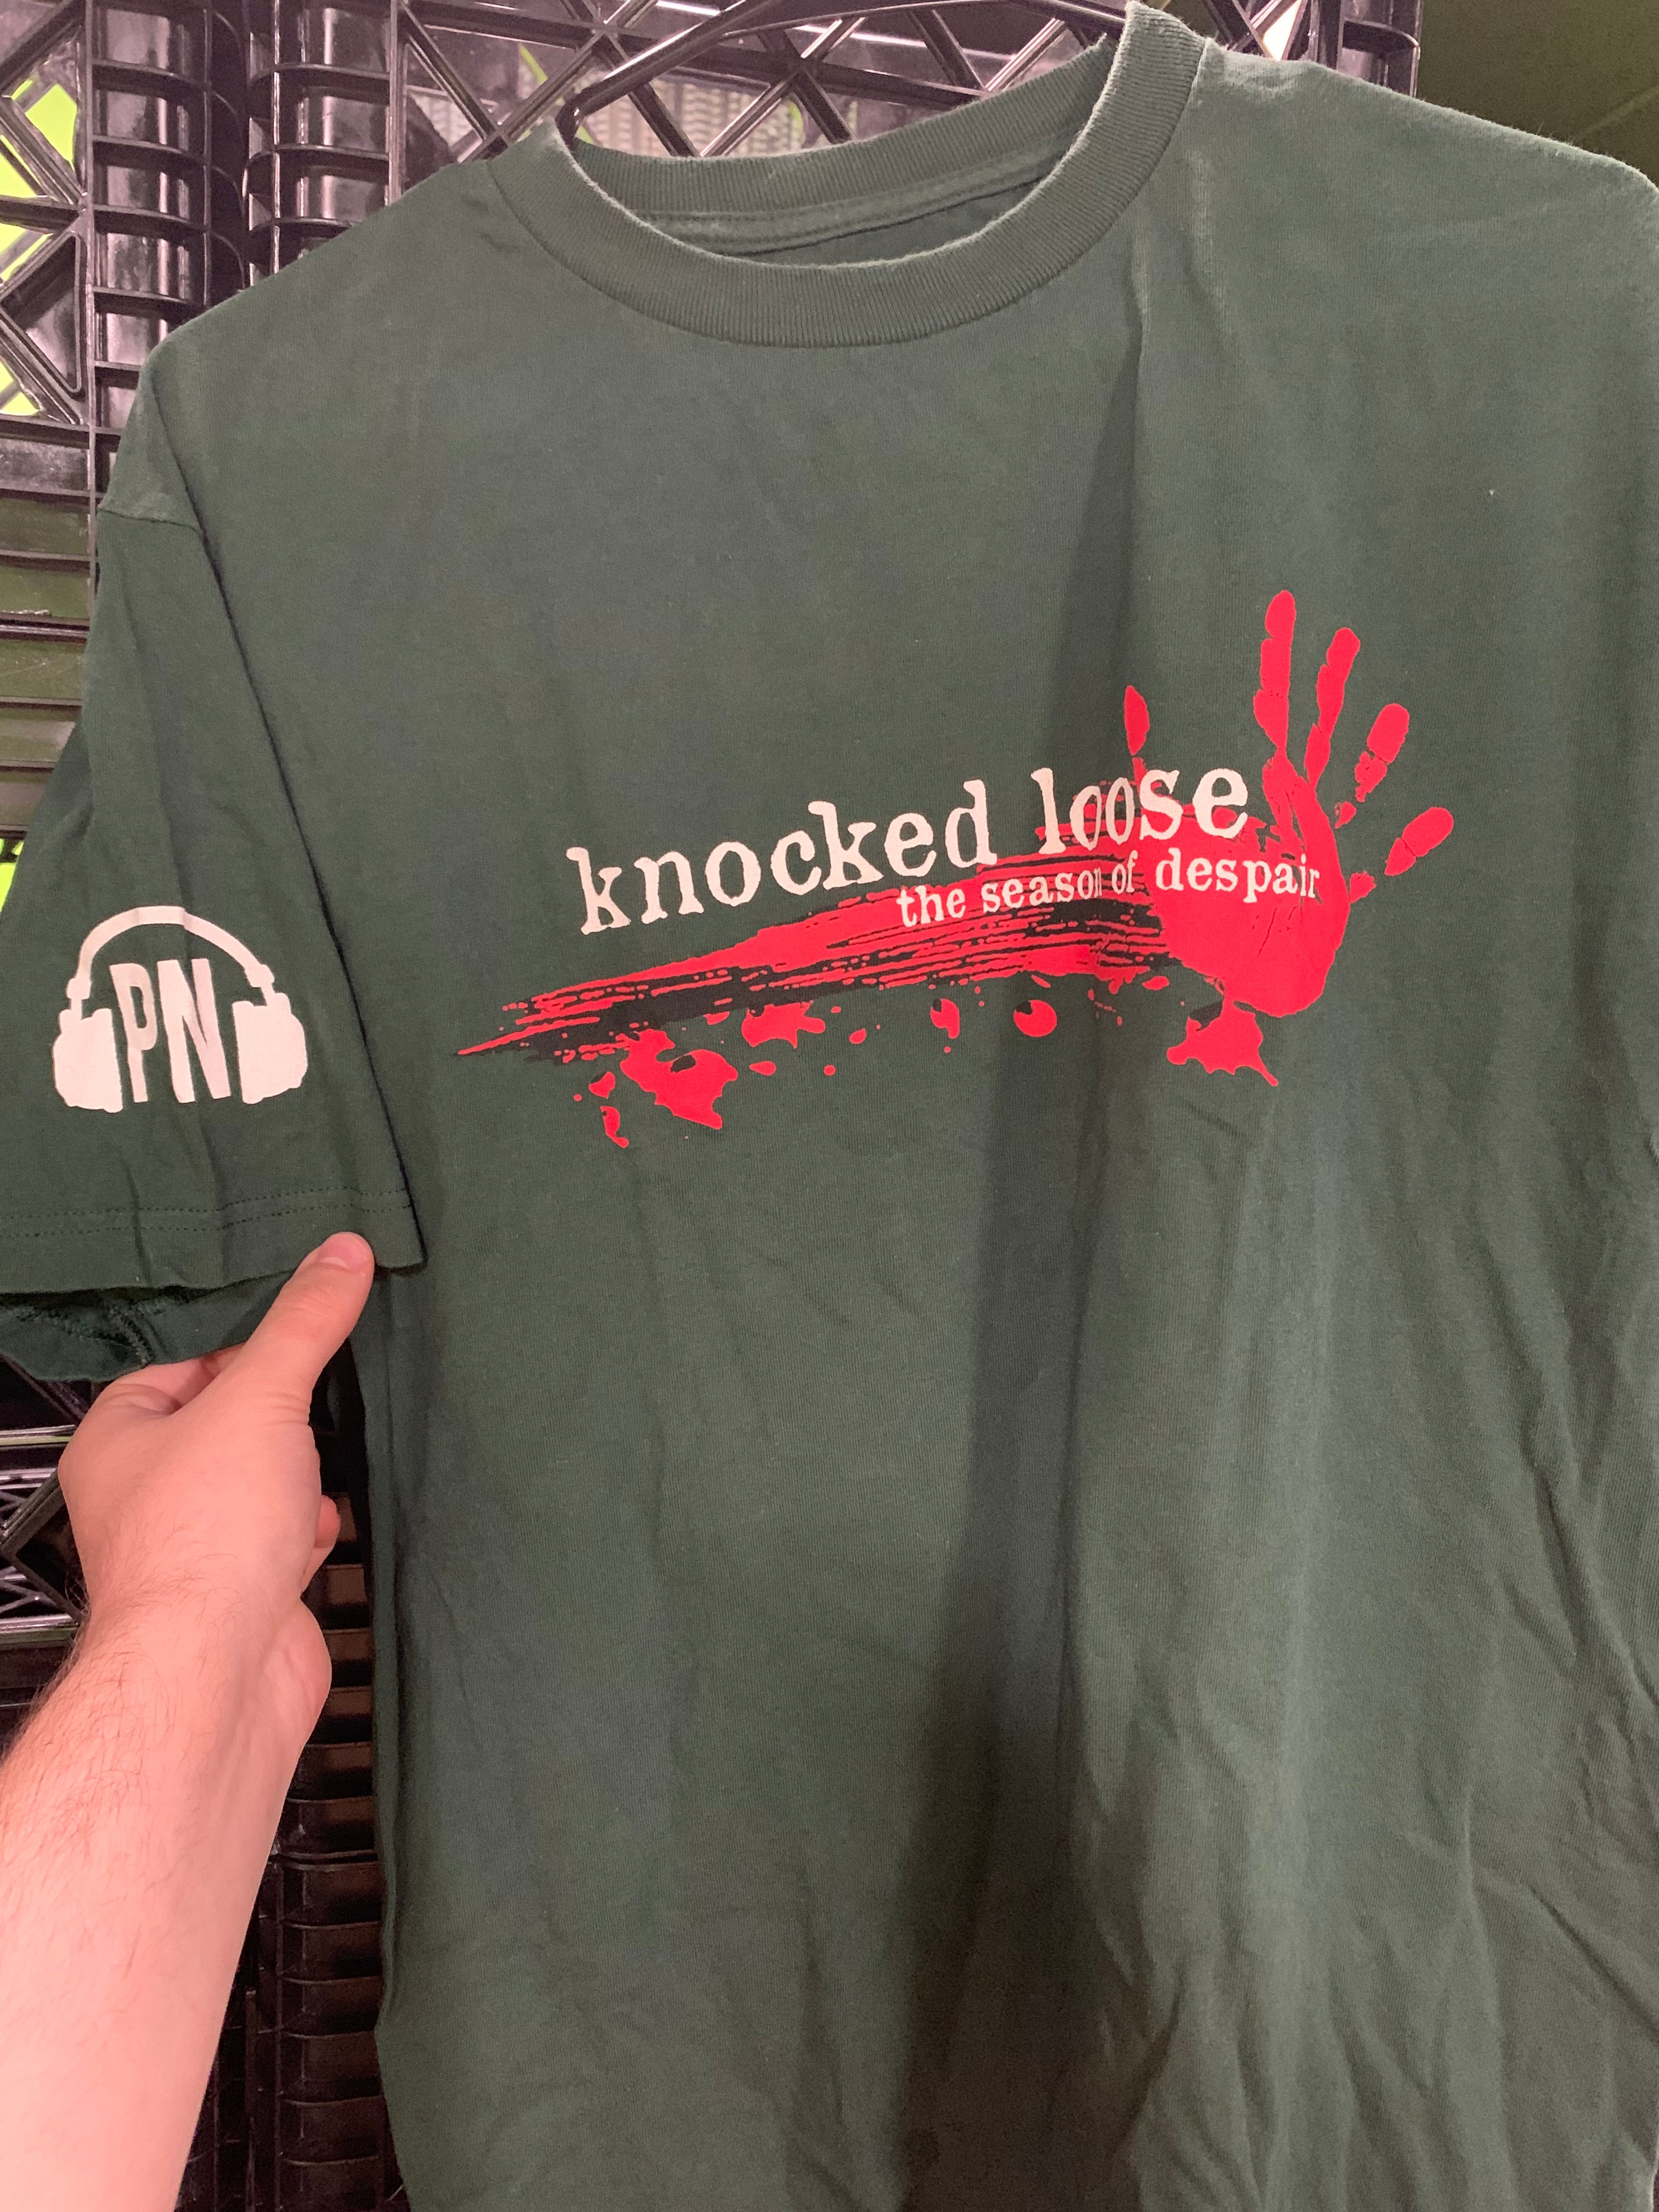 Knocked Loose 2017 Season Of Despair T-Shirt, Green, M